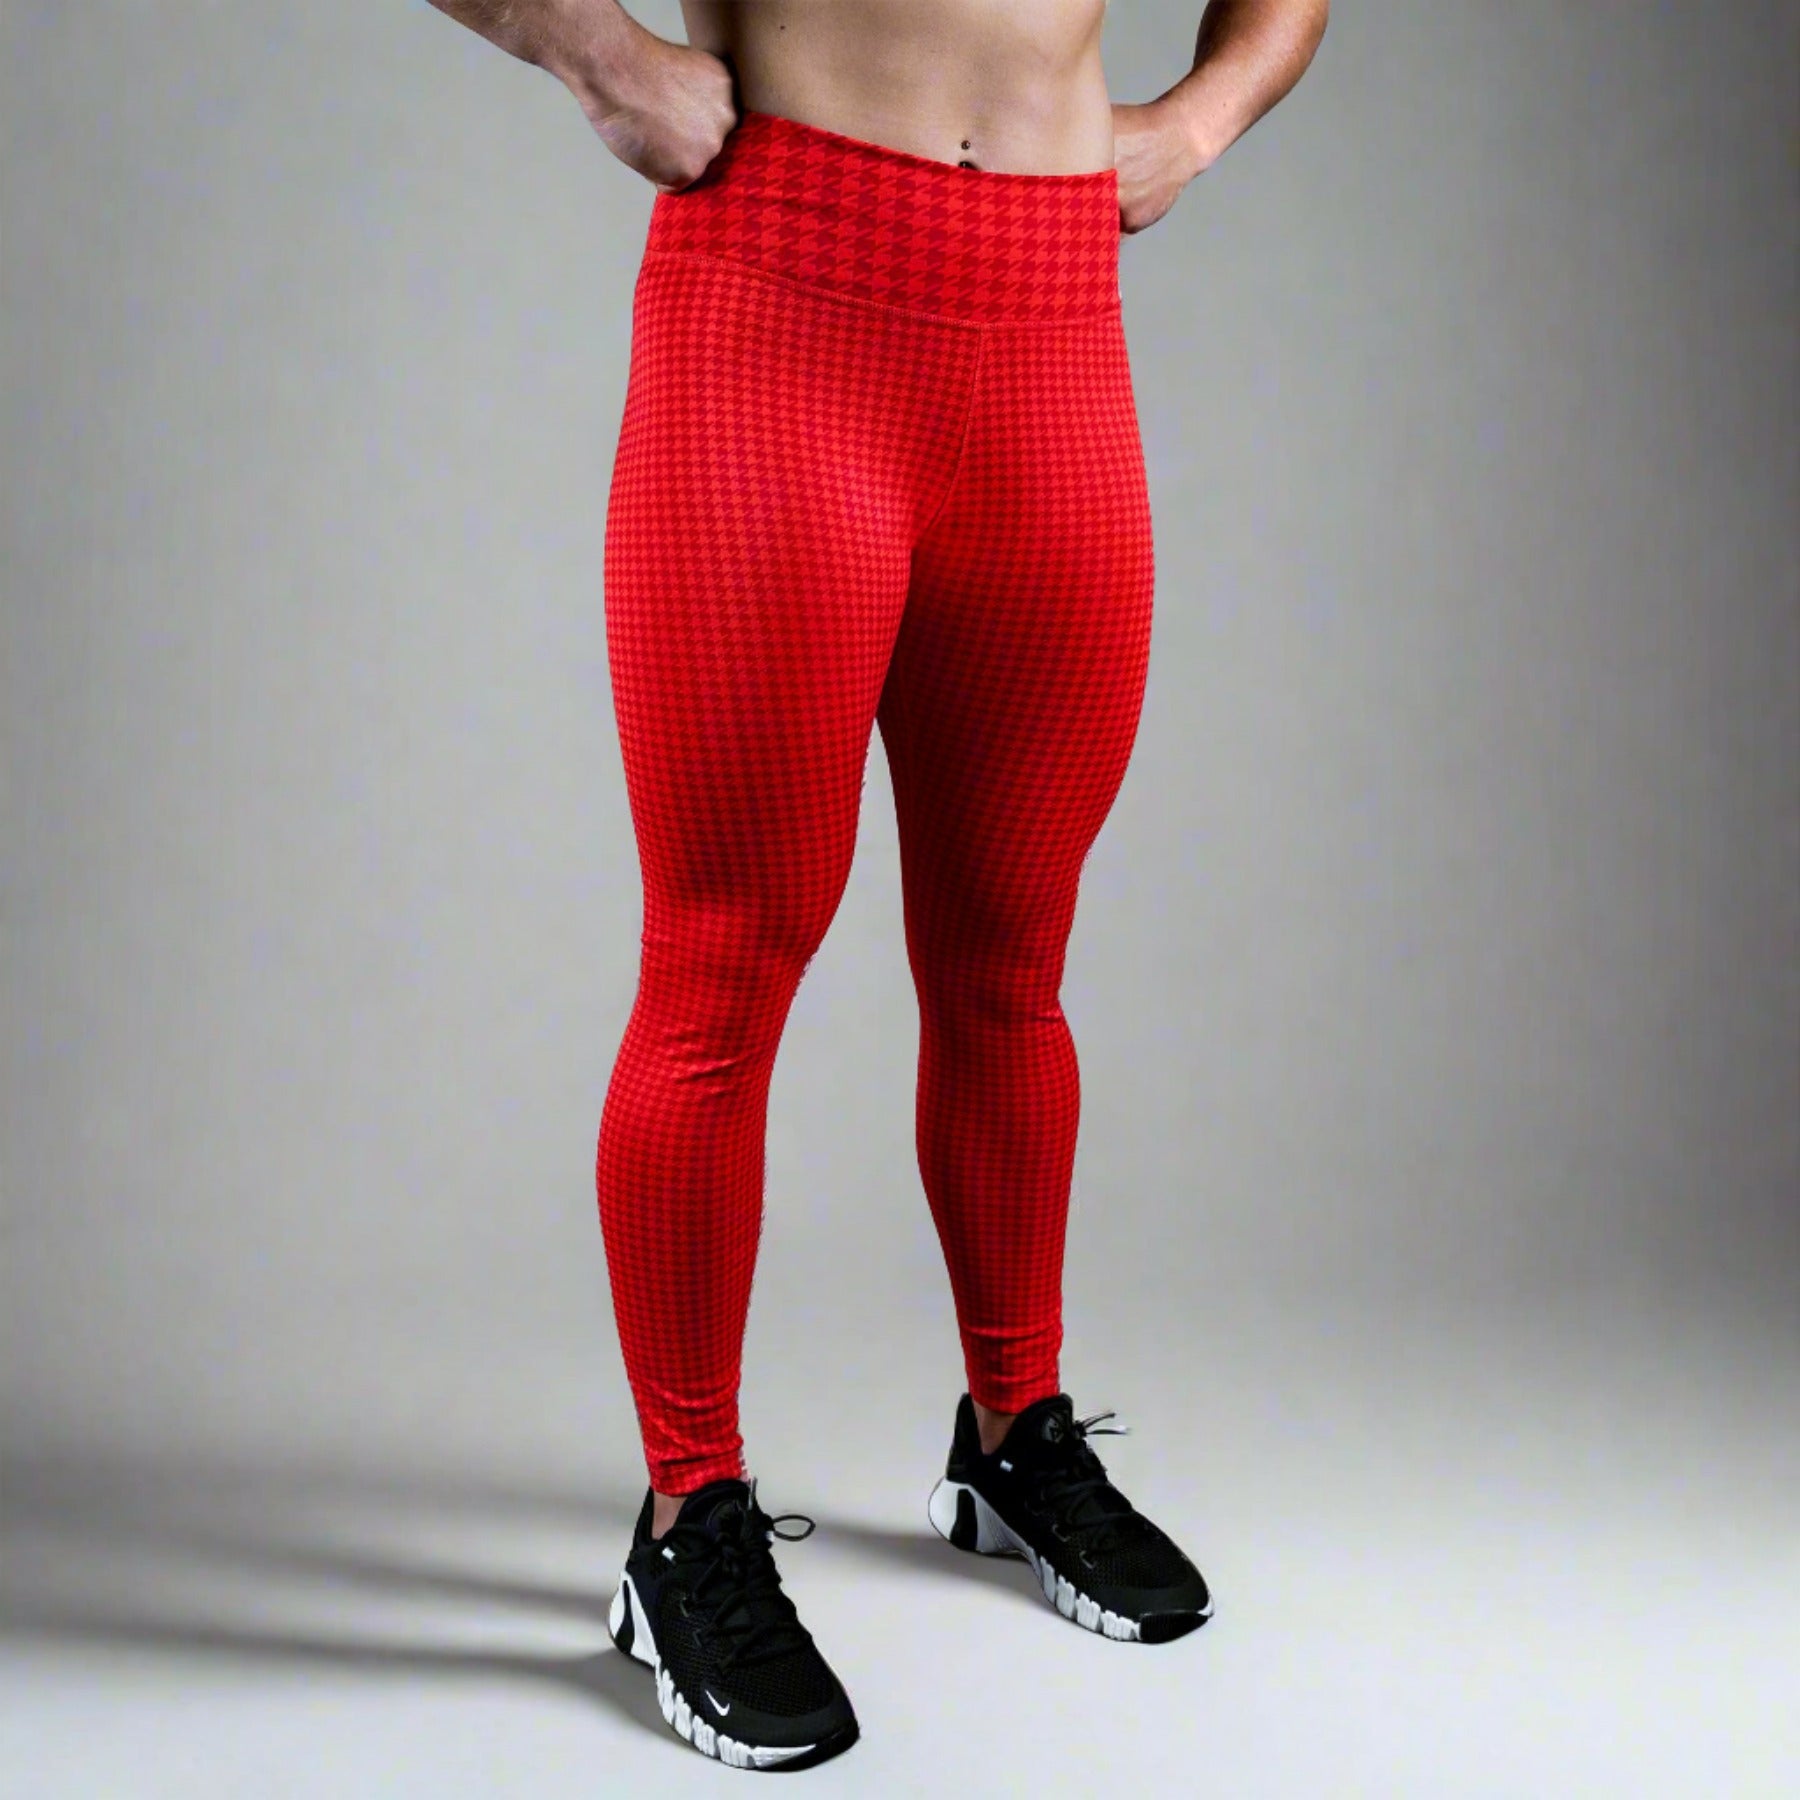 LEEy-World Gym Leggings for Women Women's Winter Warm Lined Leggings -  Thick Velvet Tights Thermal Pants Red,XL - Walmart.com